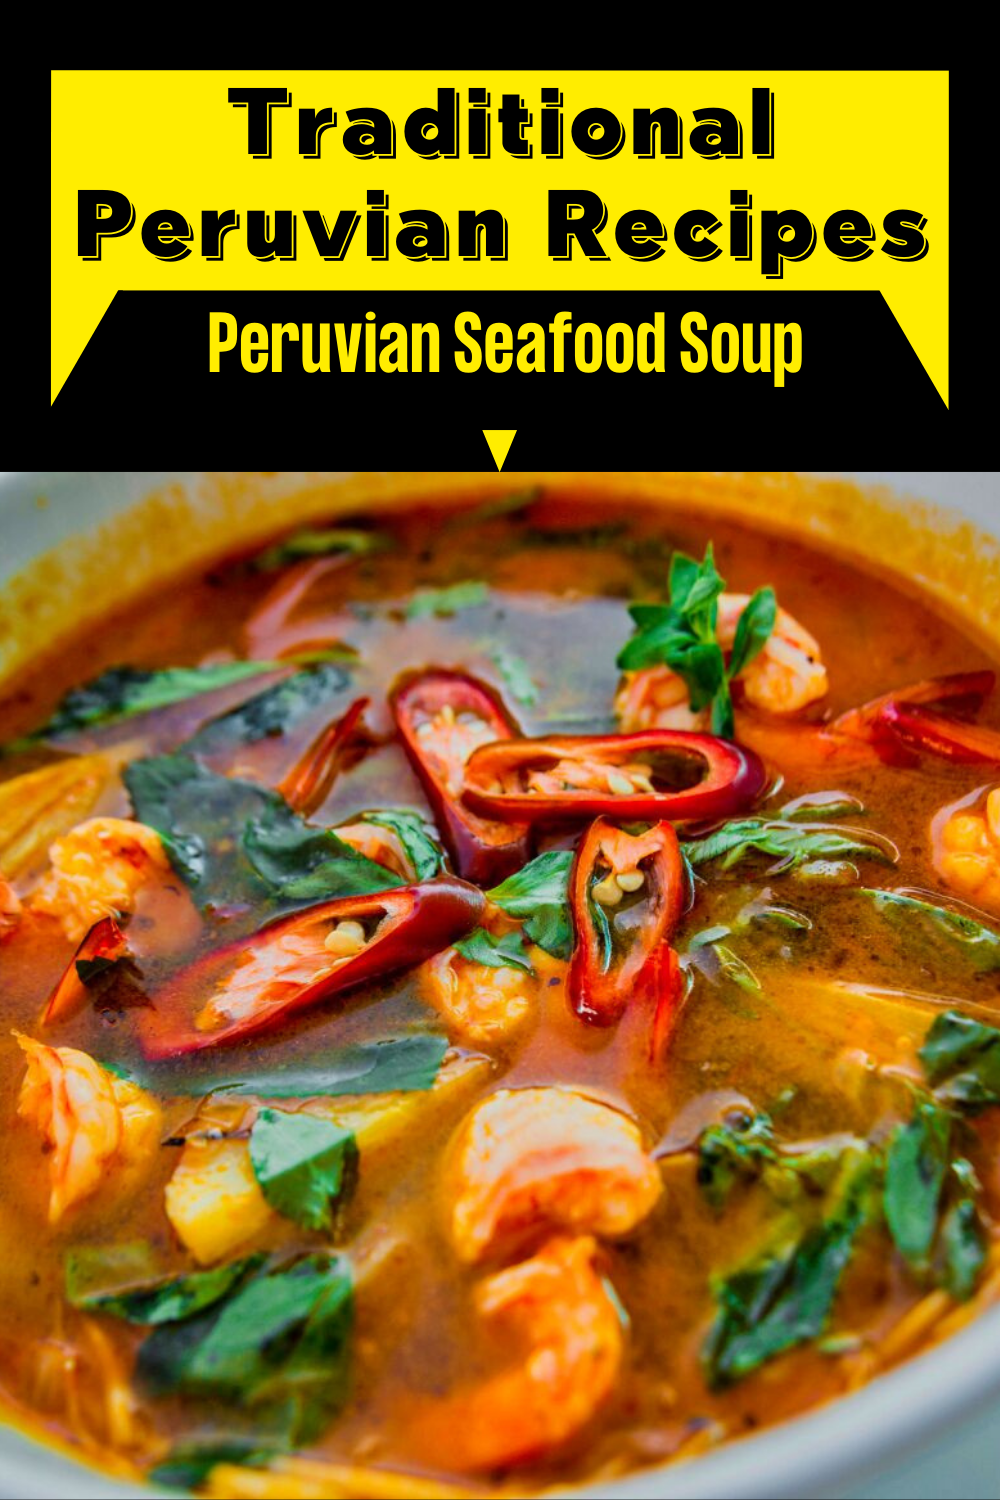 _Peruvian Seafood Soup